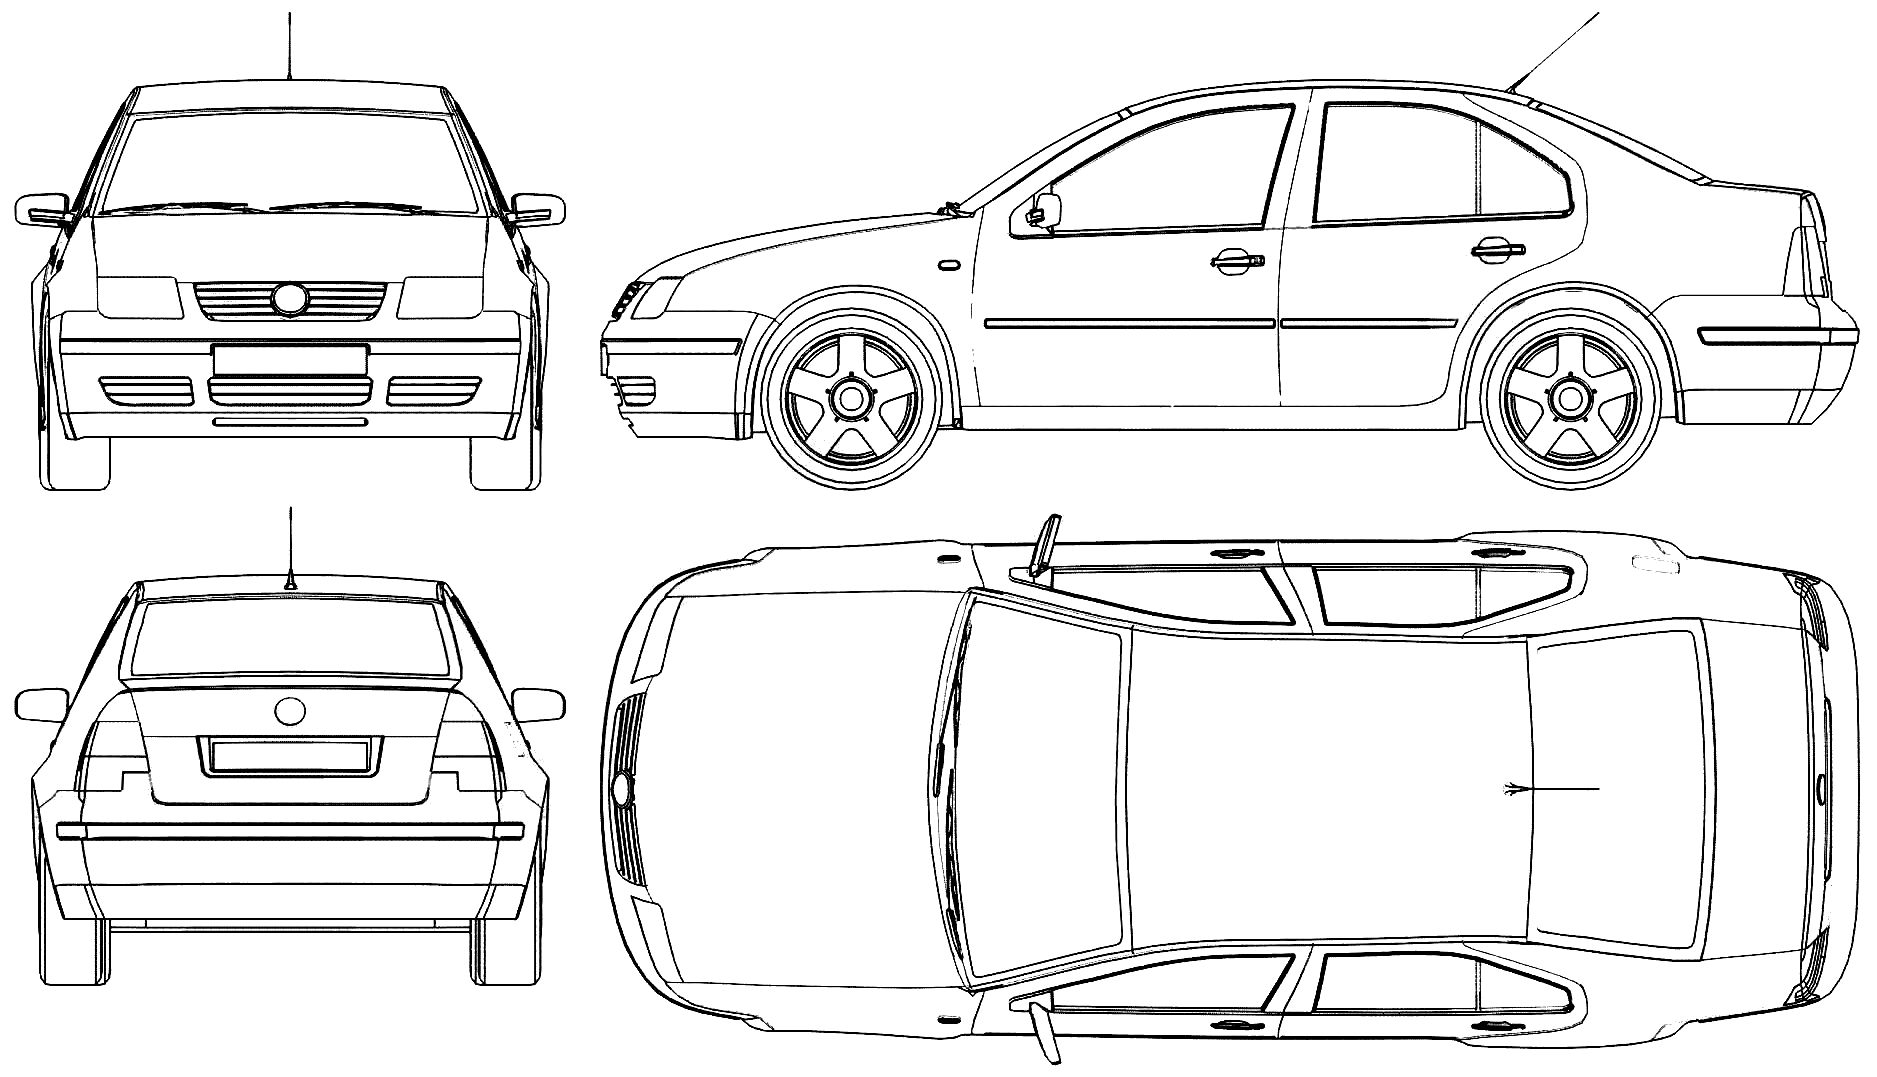 Volkswagen jetta размеры. Volkswagen Bora Blueprint. Volkswagen Bora 2005 чертеж. Volkswagen Golf 4 Blueprint. Фольксваген Джетта 4 габариты.